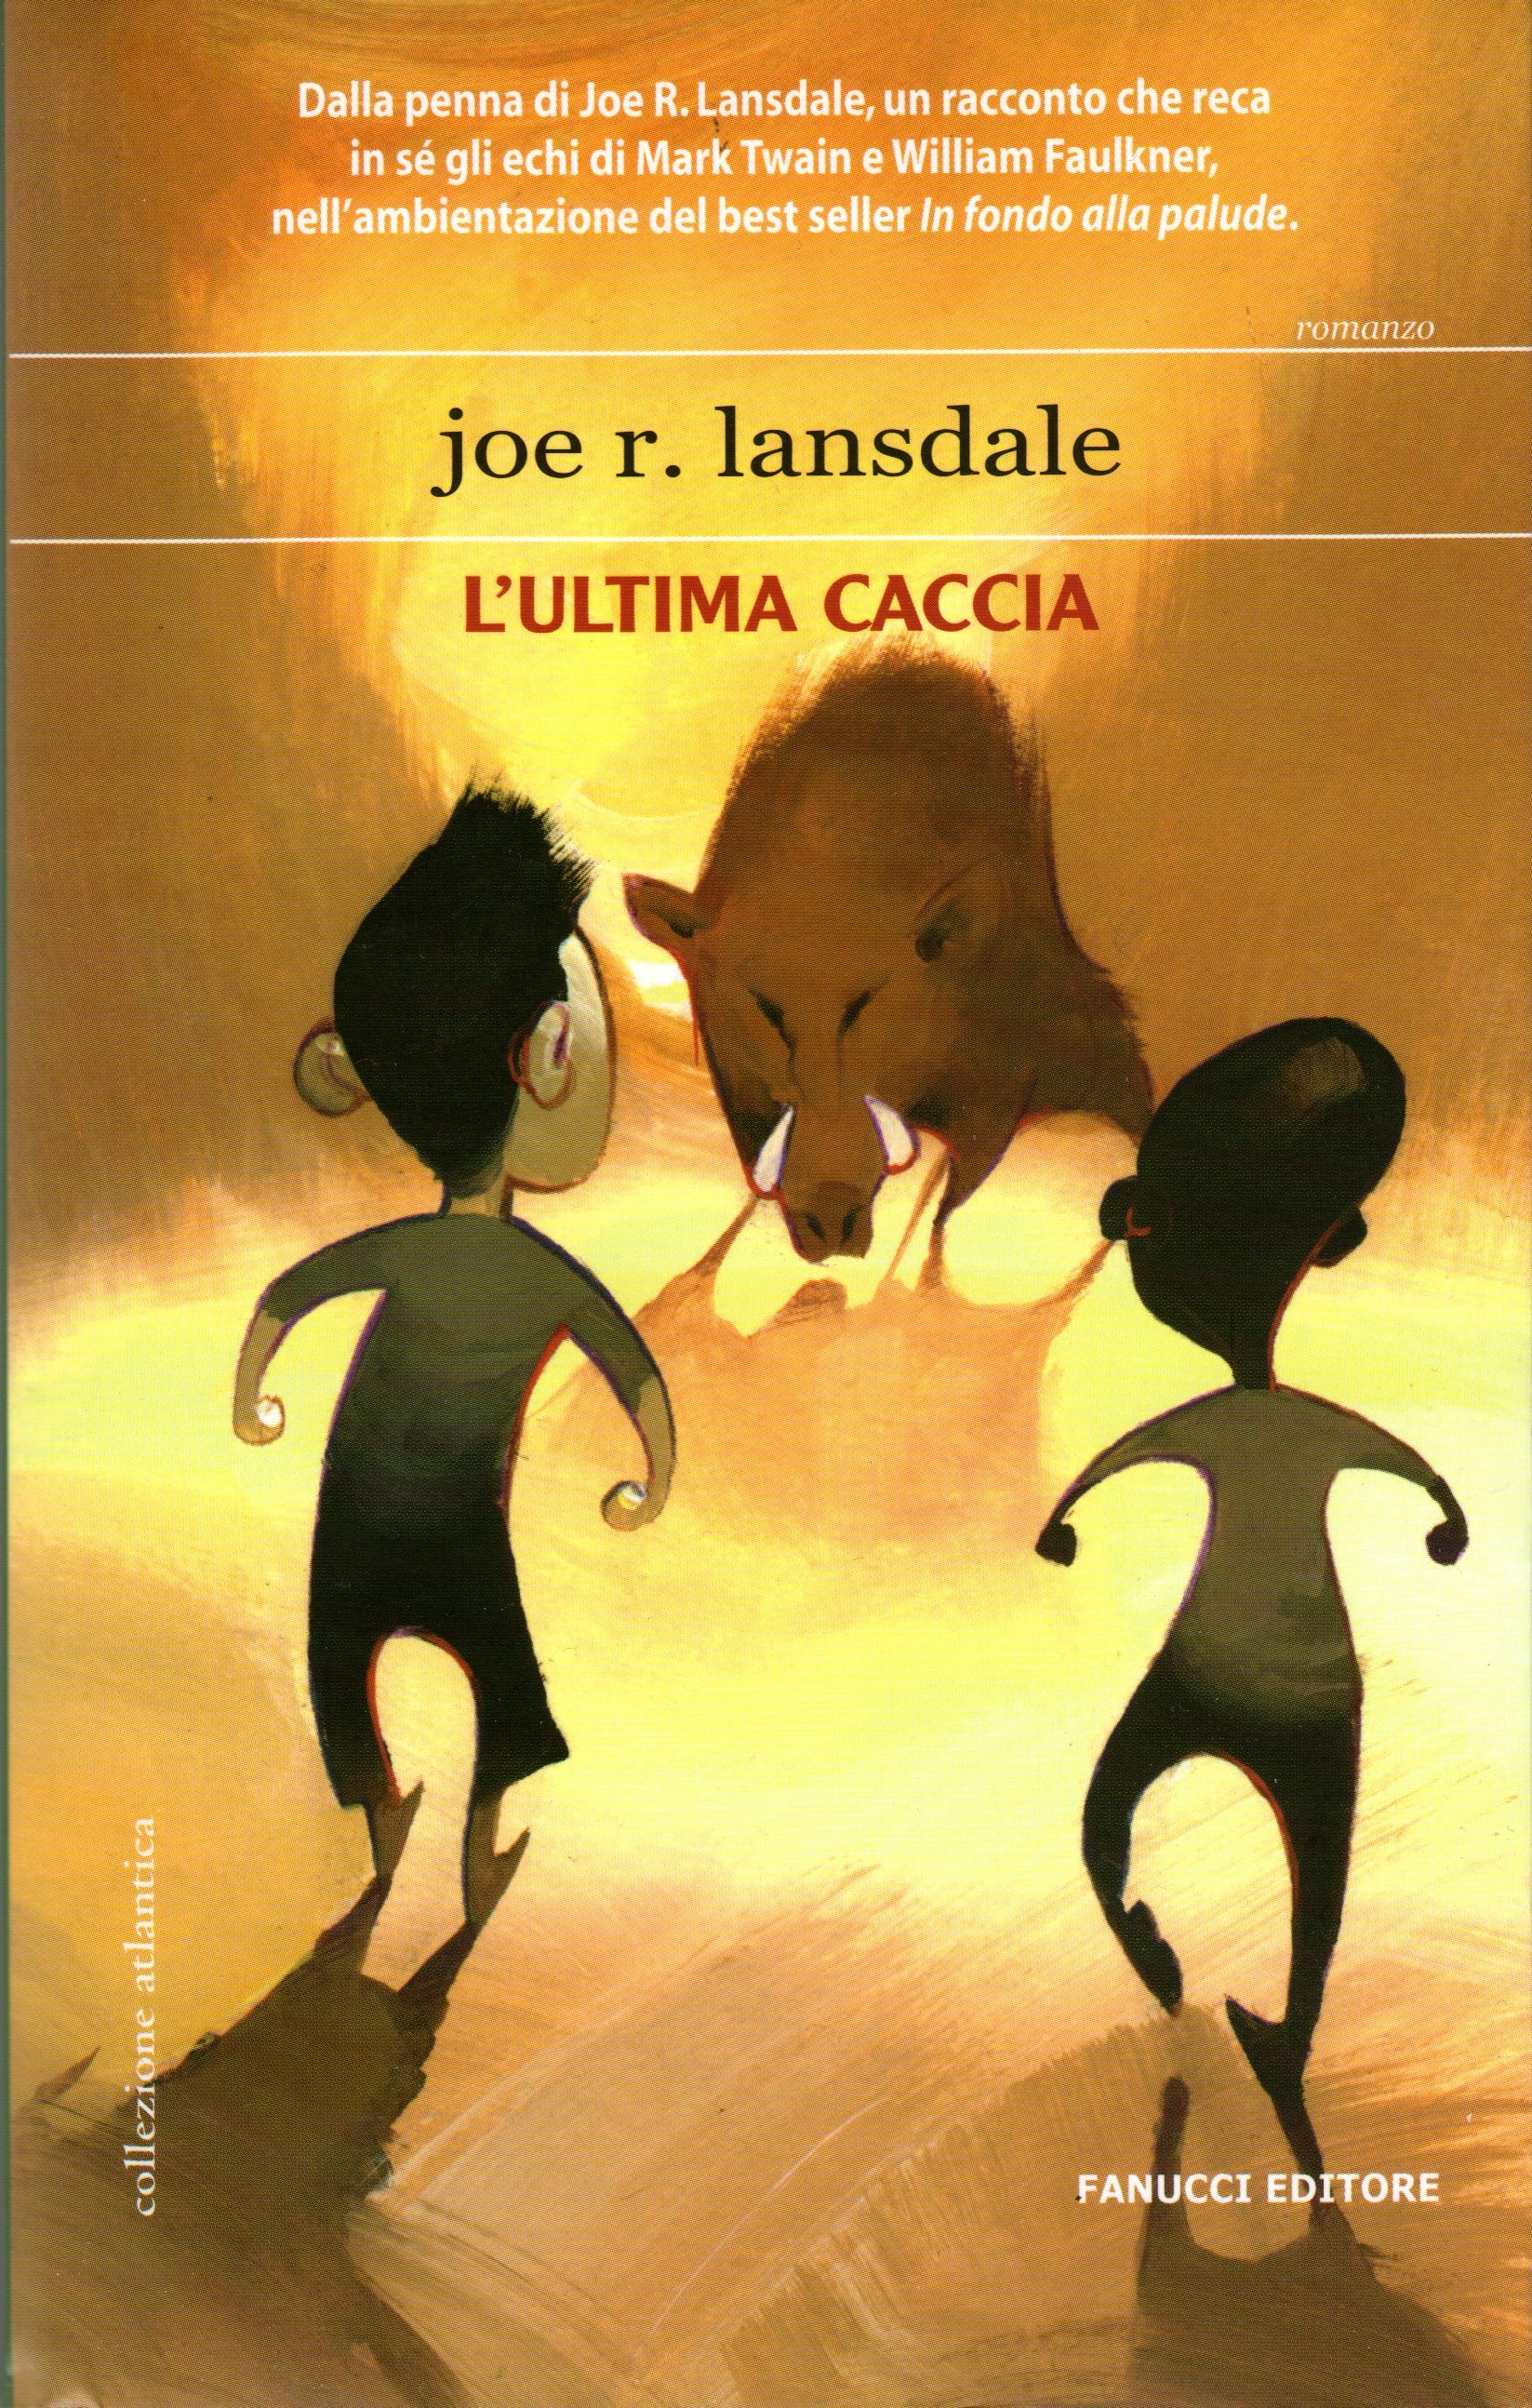 Joe R. Lansdale: L'ultima caccia (Paperback, Italiano language, 2006, Fanucci)